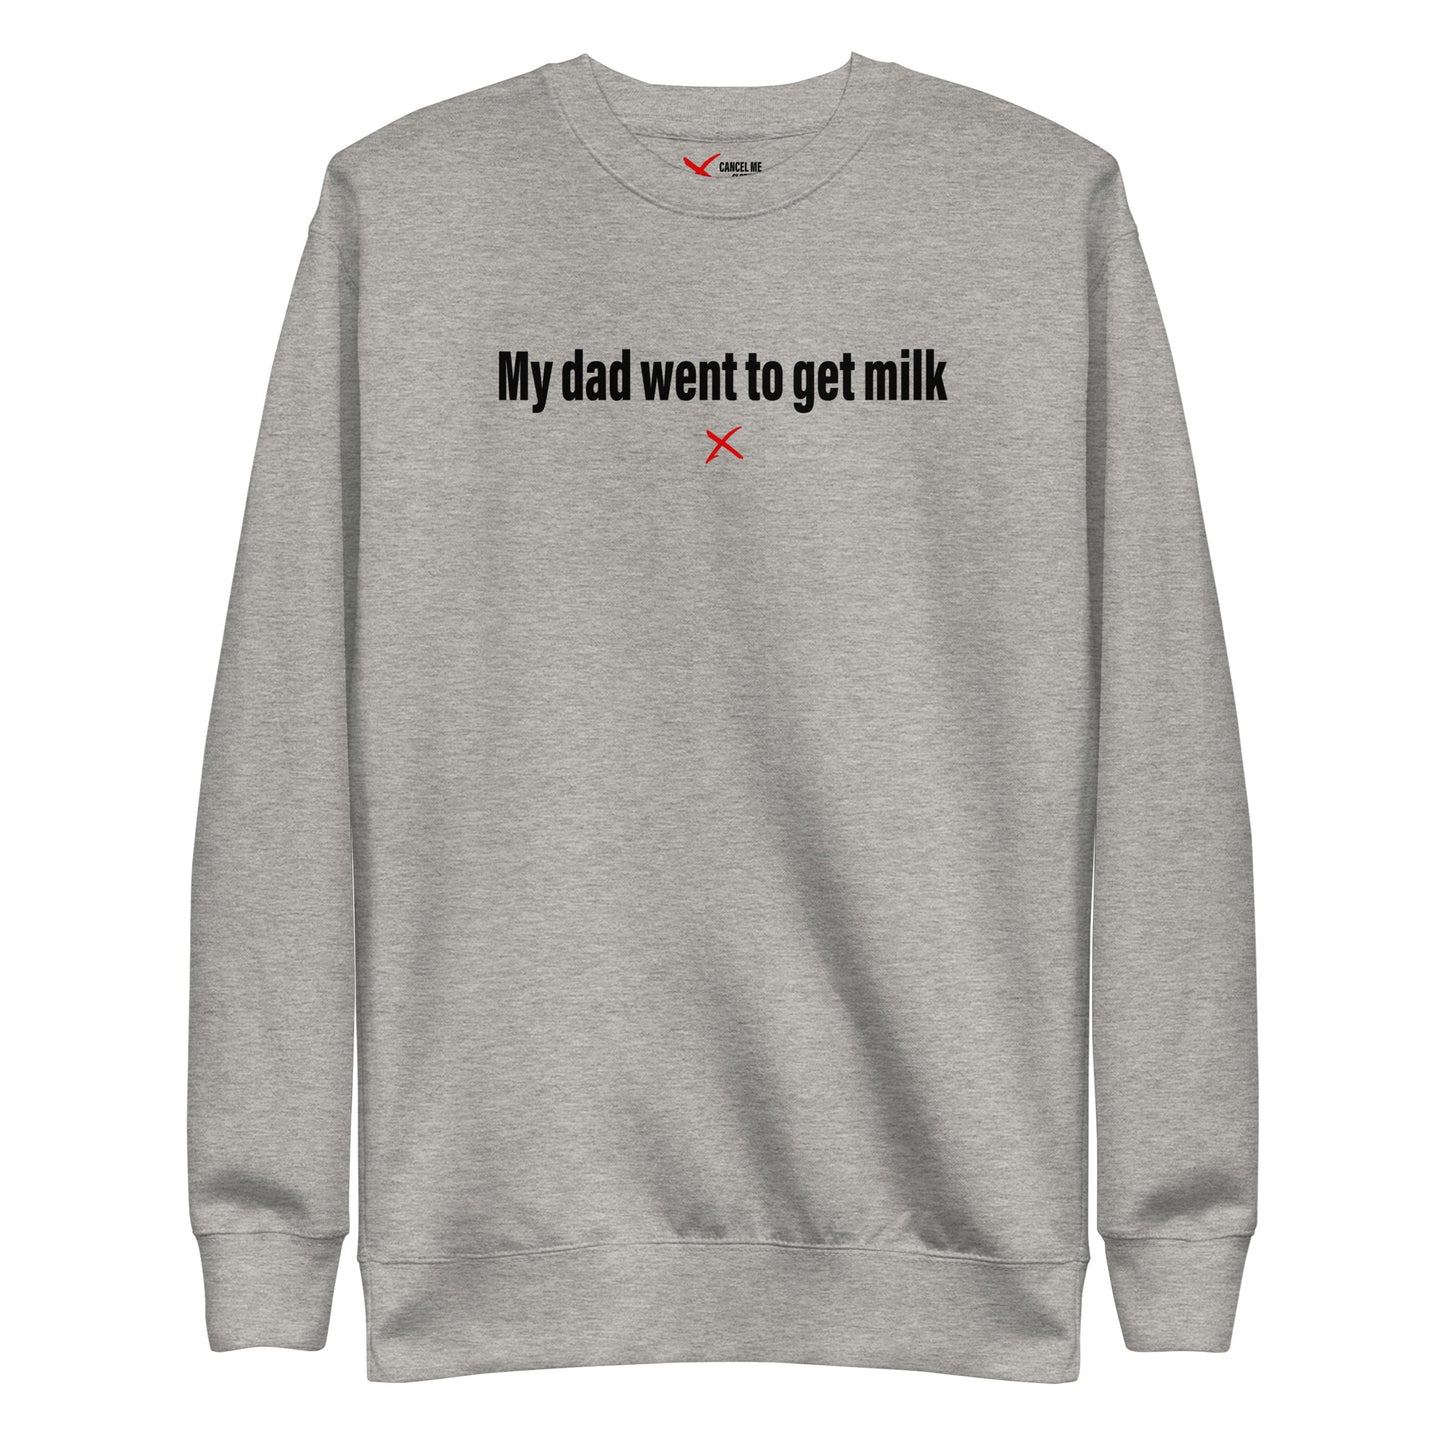 My dad went to get milk - Sweatshirt